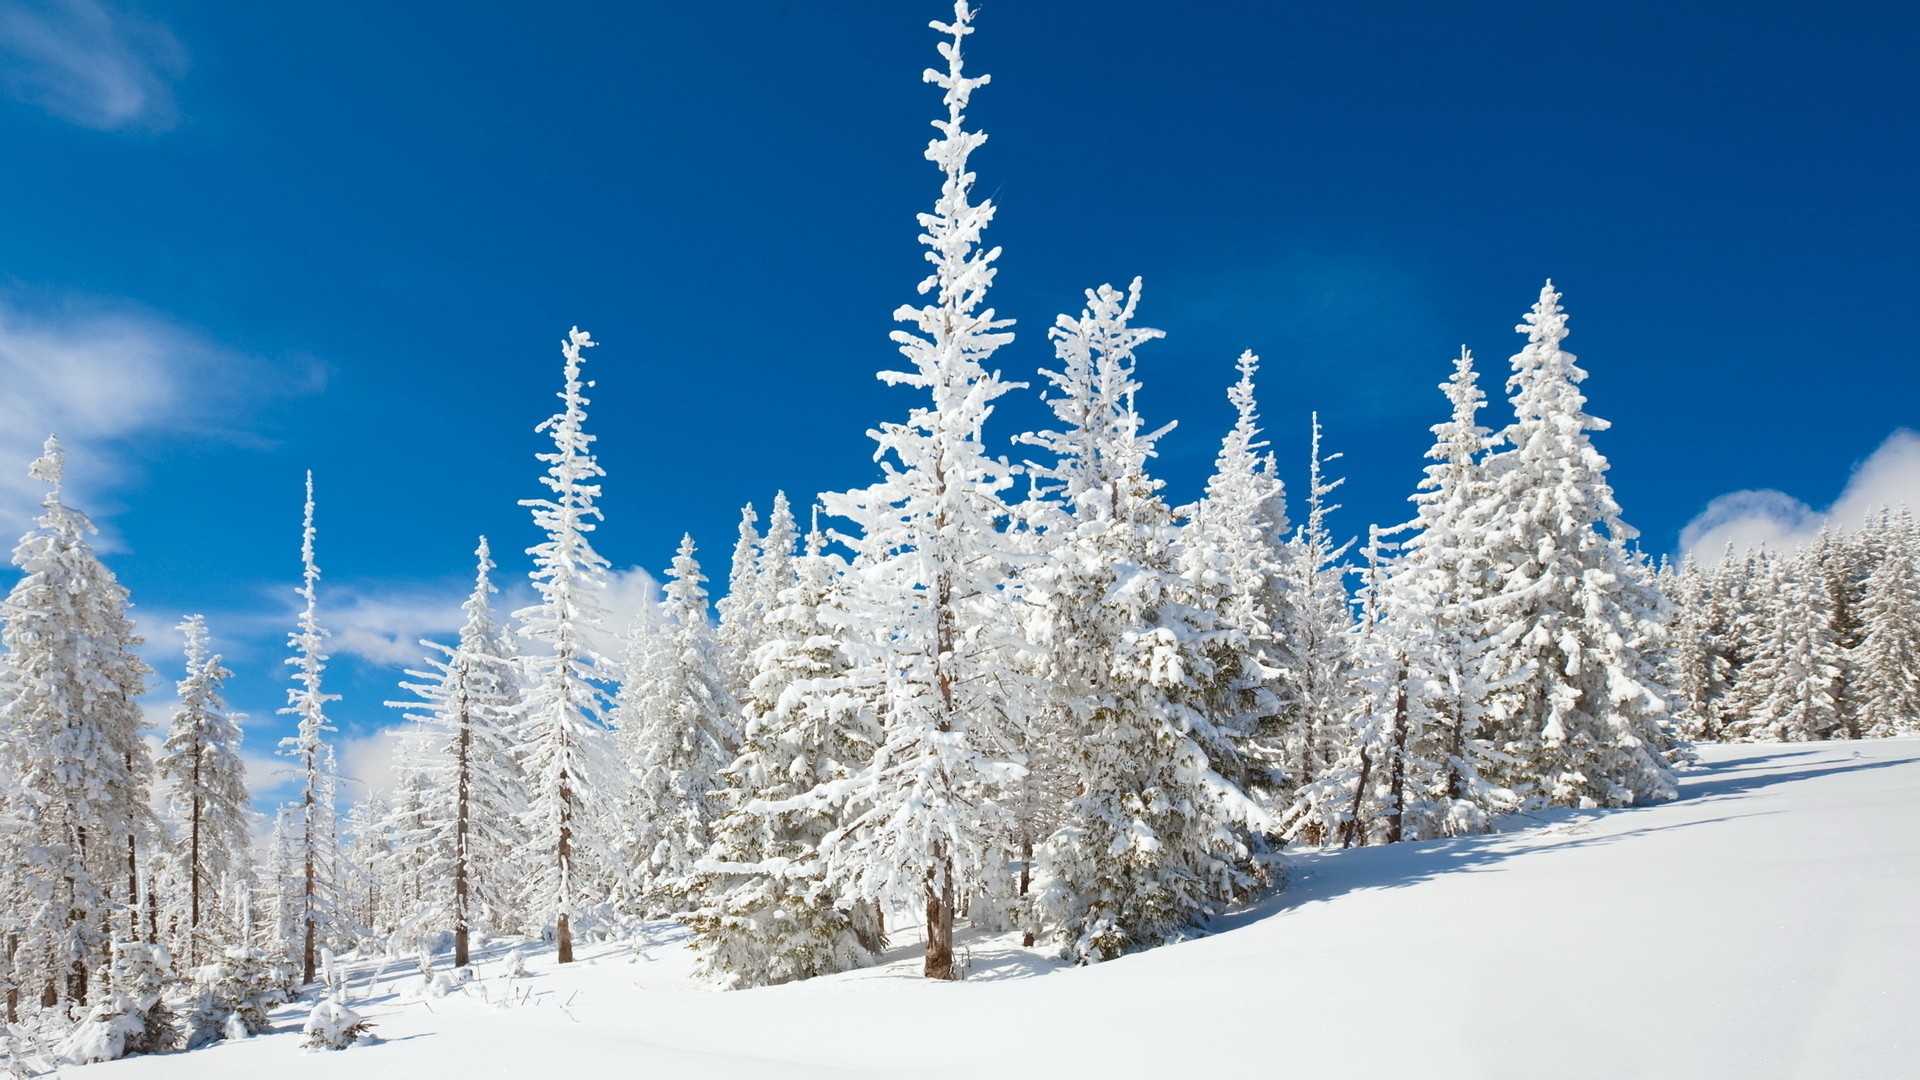 Snowy Forest free wallpaper for desktop